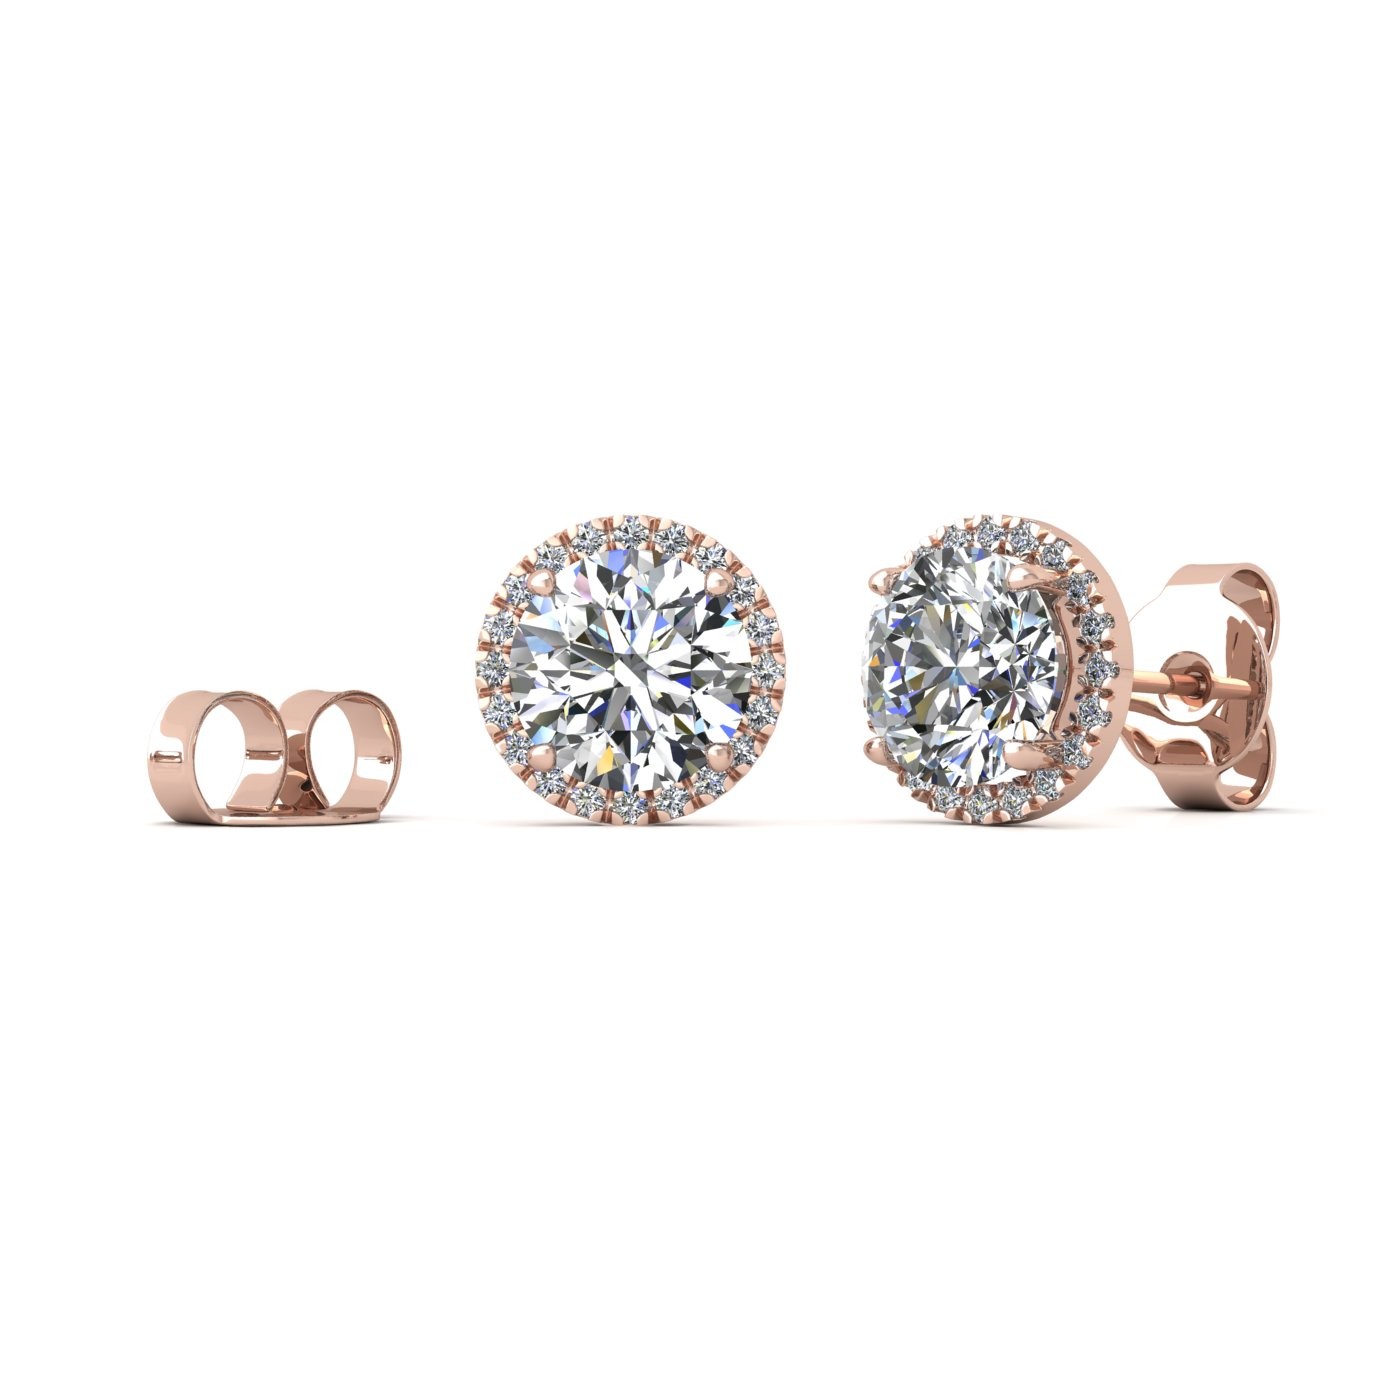 18k rose gold  0,5 ct each (1,0 tcw) 4 prongs round shape diamond earrings with diamond pavÉ set halo